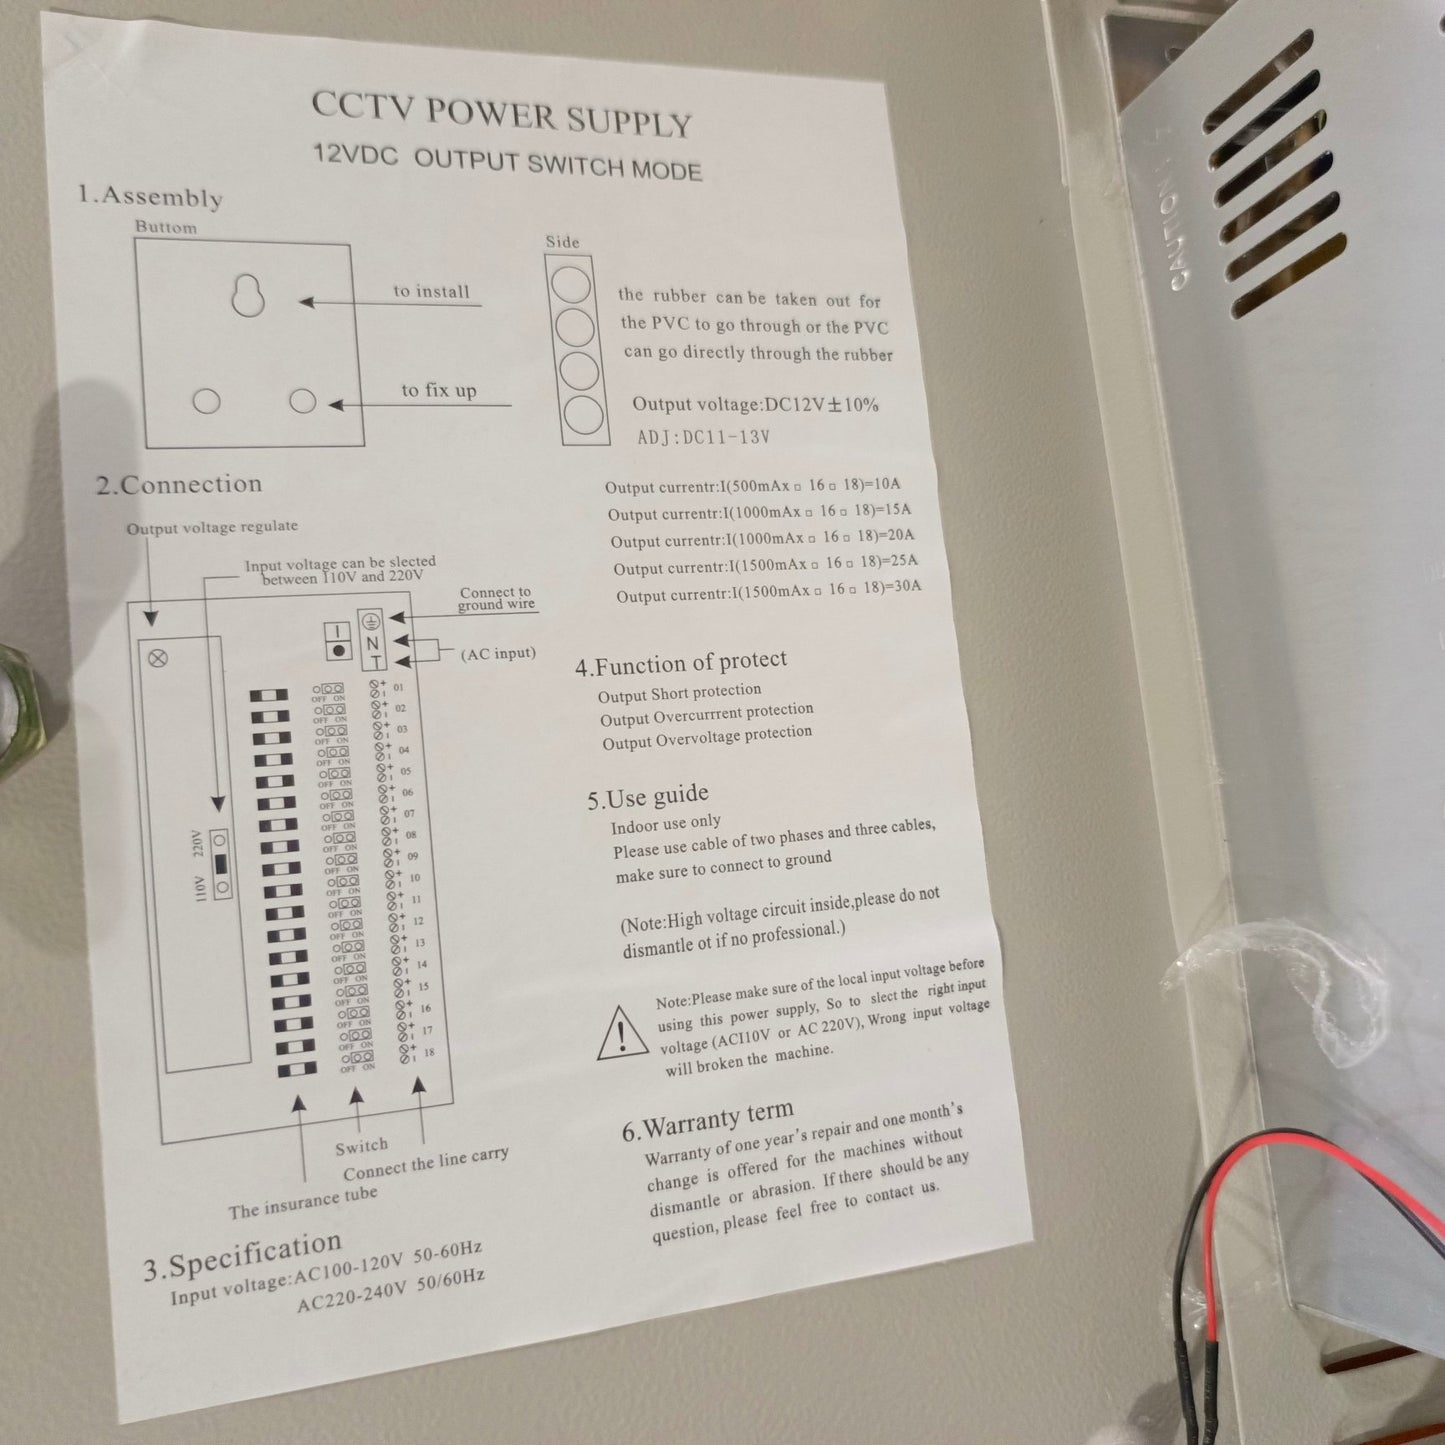 GENERIC 16-Way CCTV Power Supply Box - Instruction Manual 